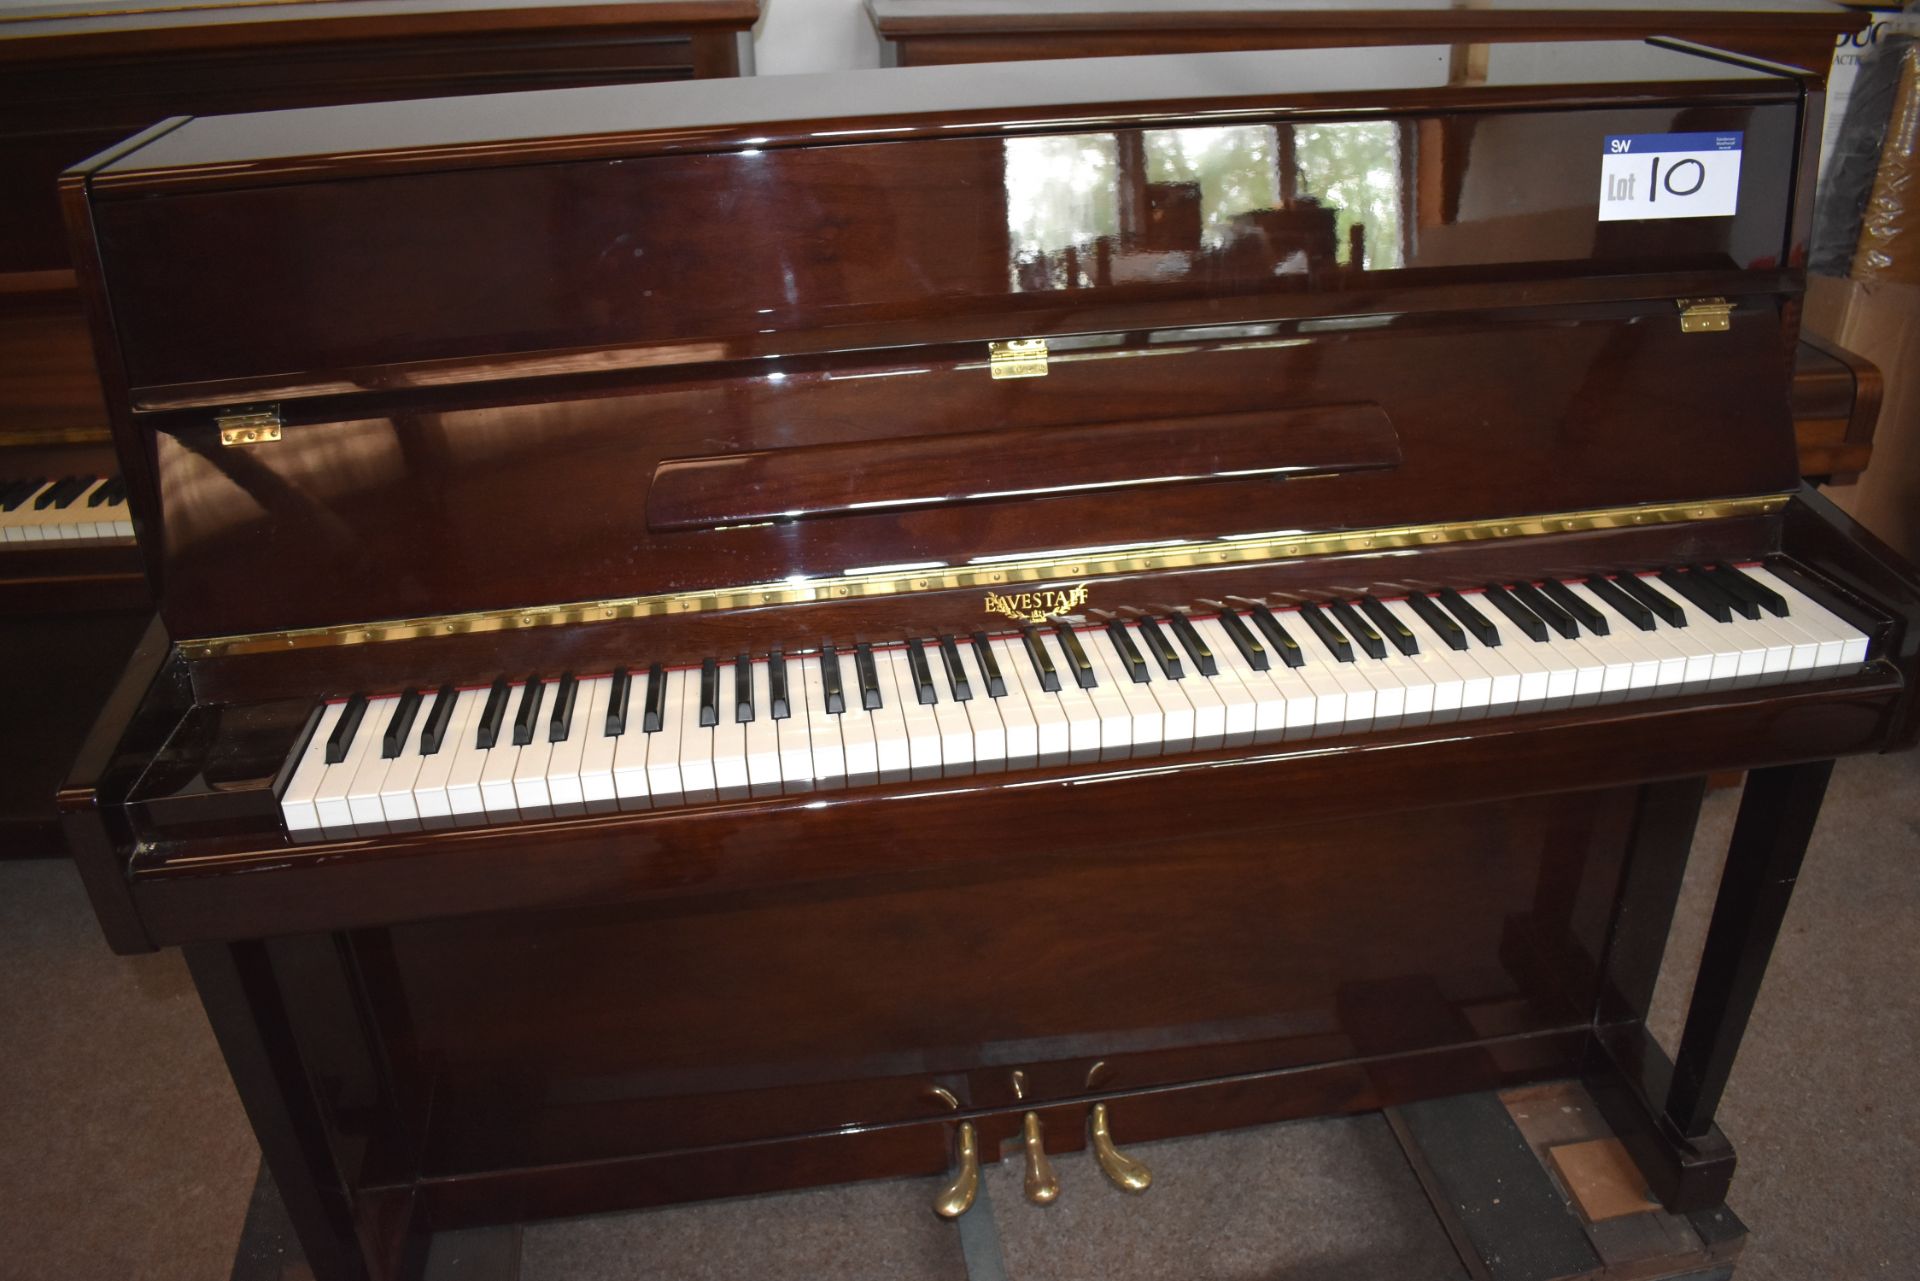 Eavestaff 112cm Upright Piano, Approx. 15 Years Old, Dark Polished Mahogany, Overstrung (Bridge